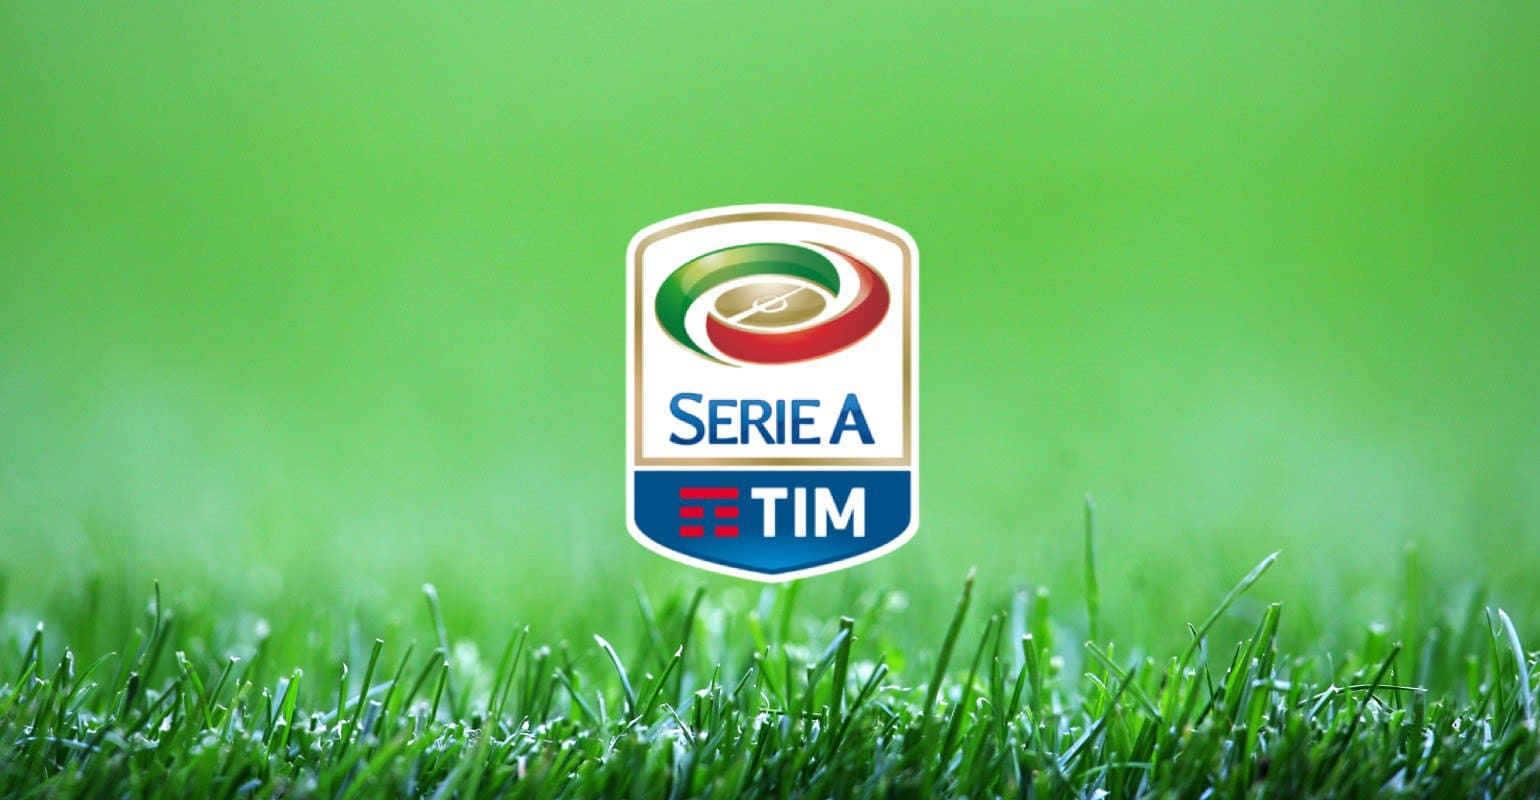 Serie a tim. Чемпионат Италии логотип.